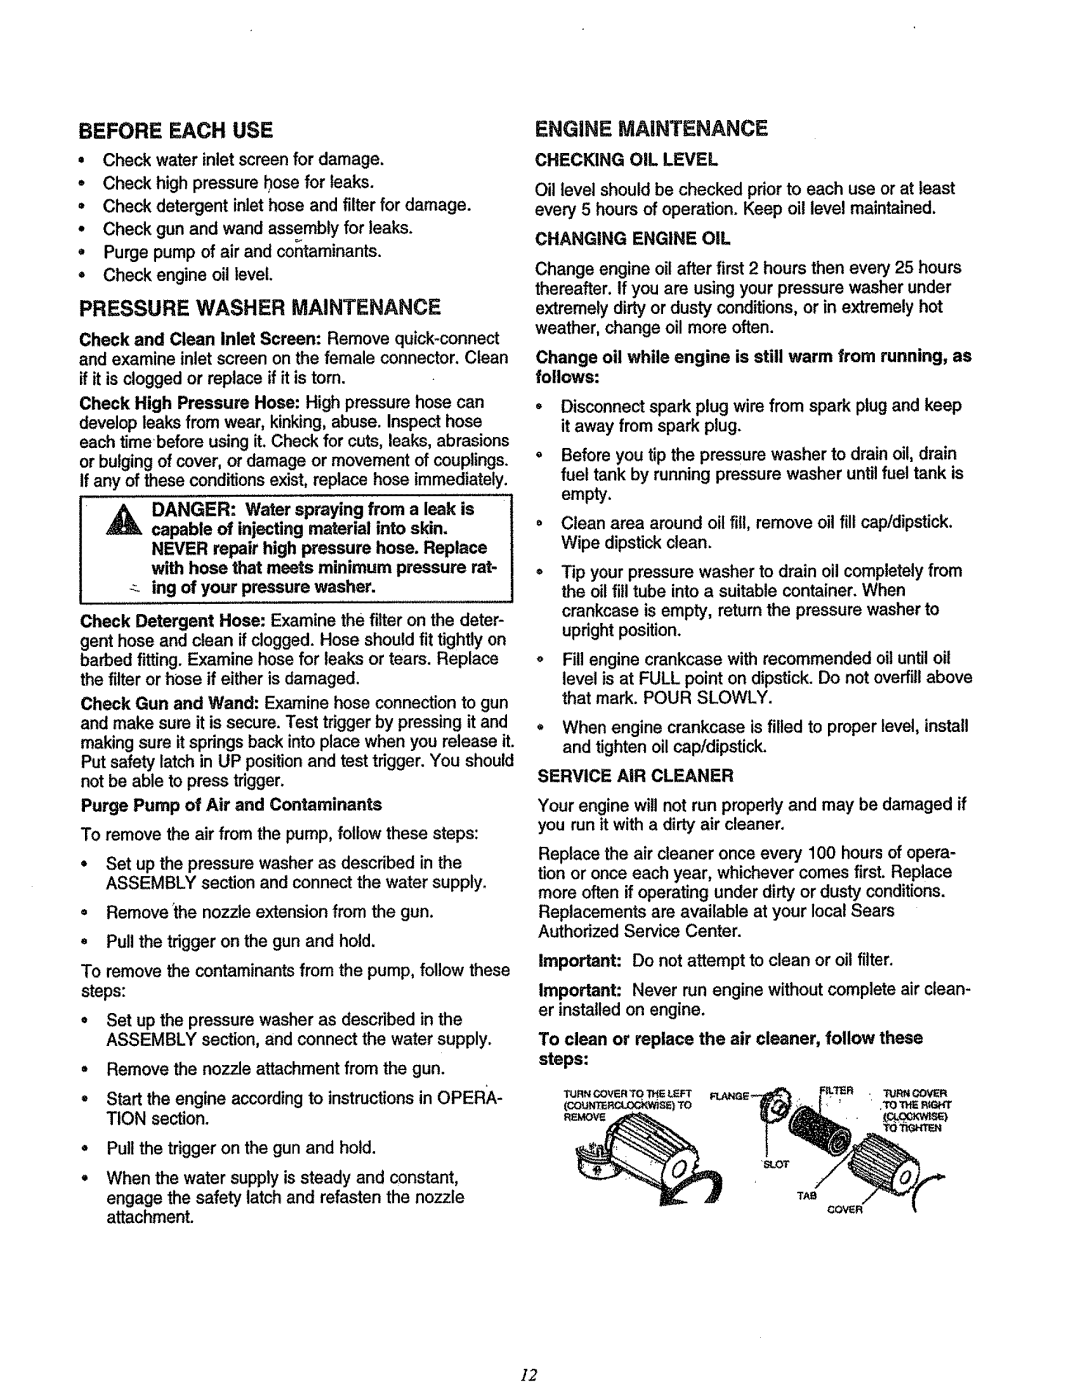 Craftsman 580.7622 manual Before Each Use, Pressure Washer Maintenance, Engine Maintenance 